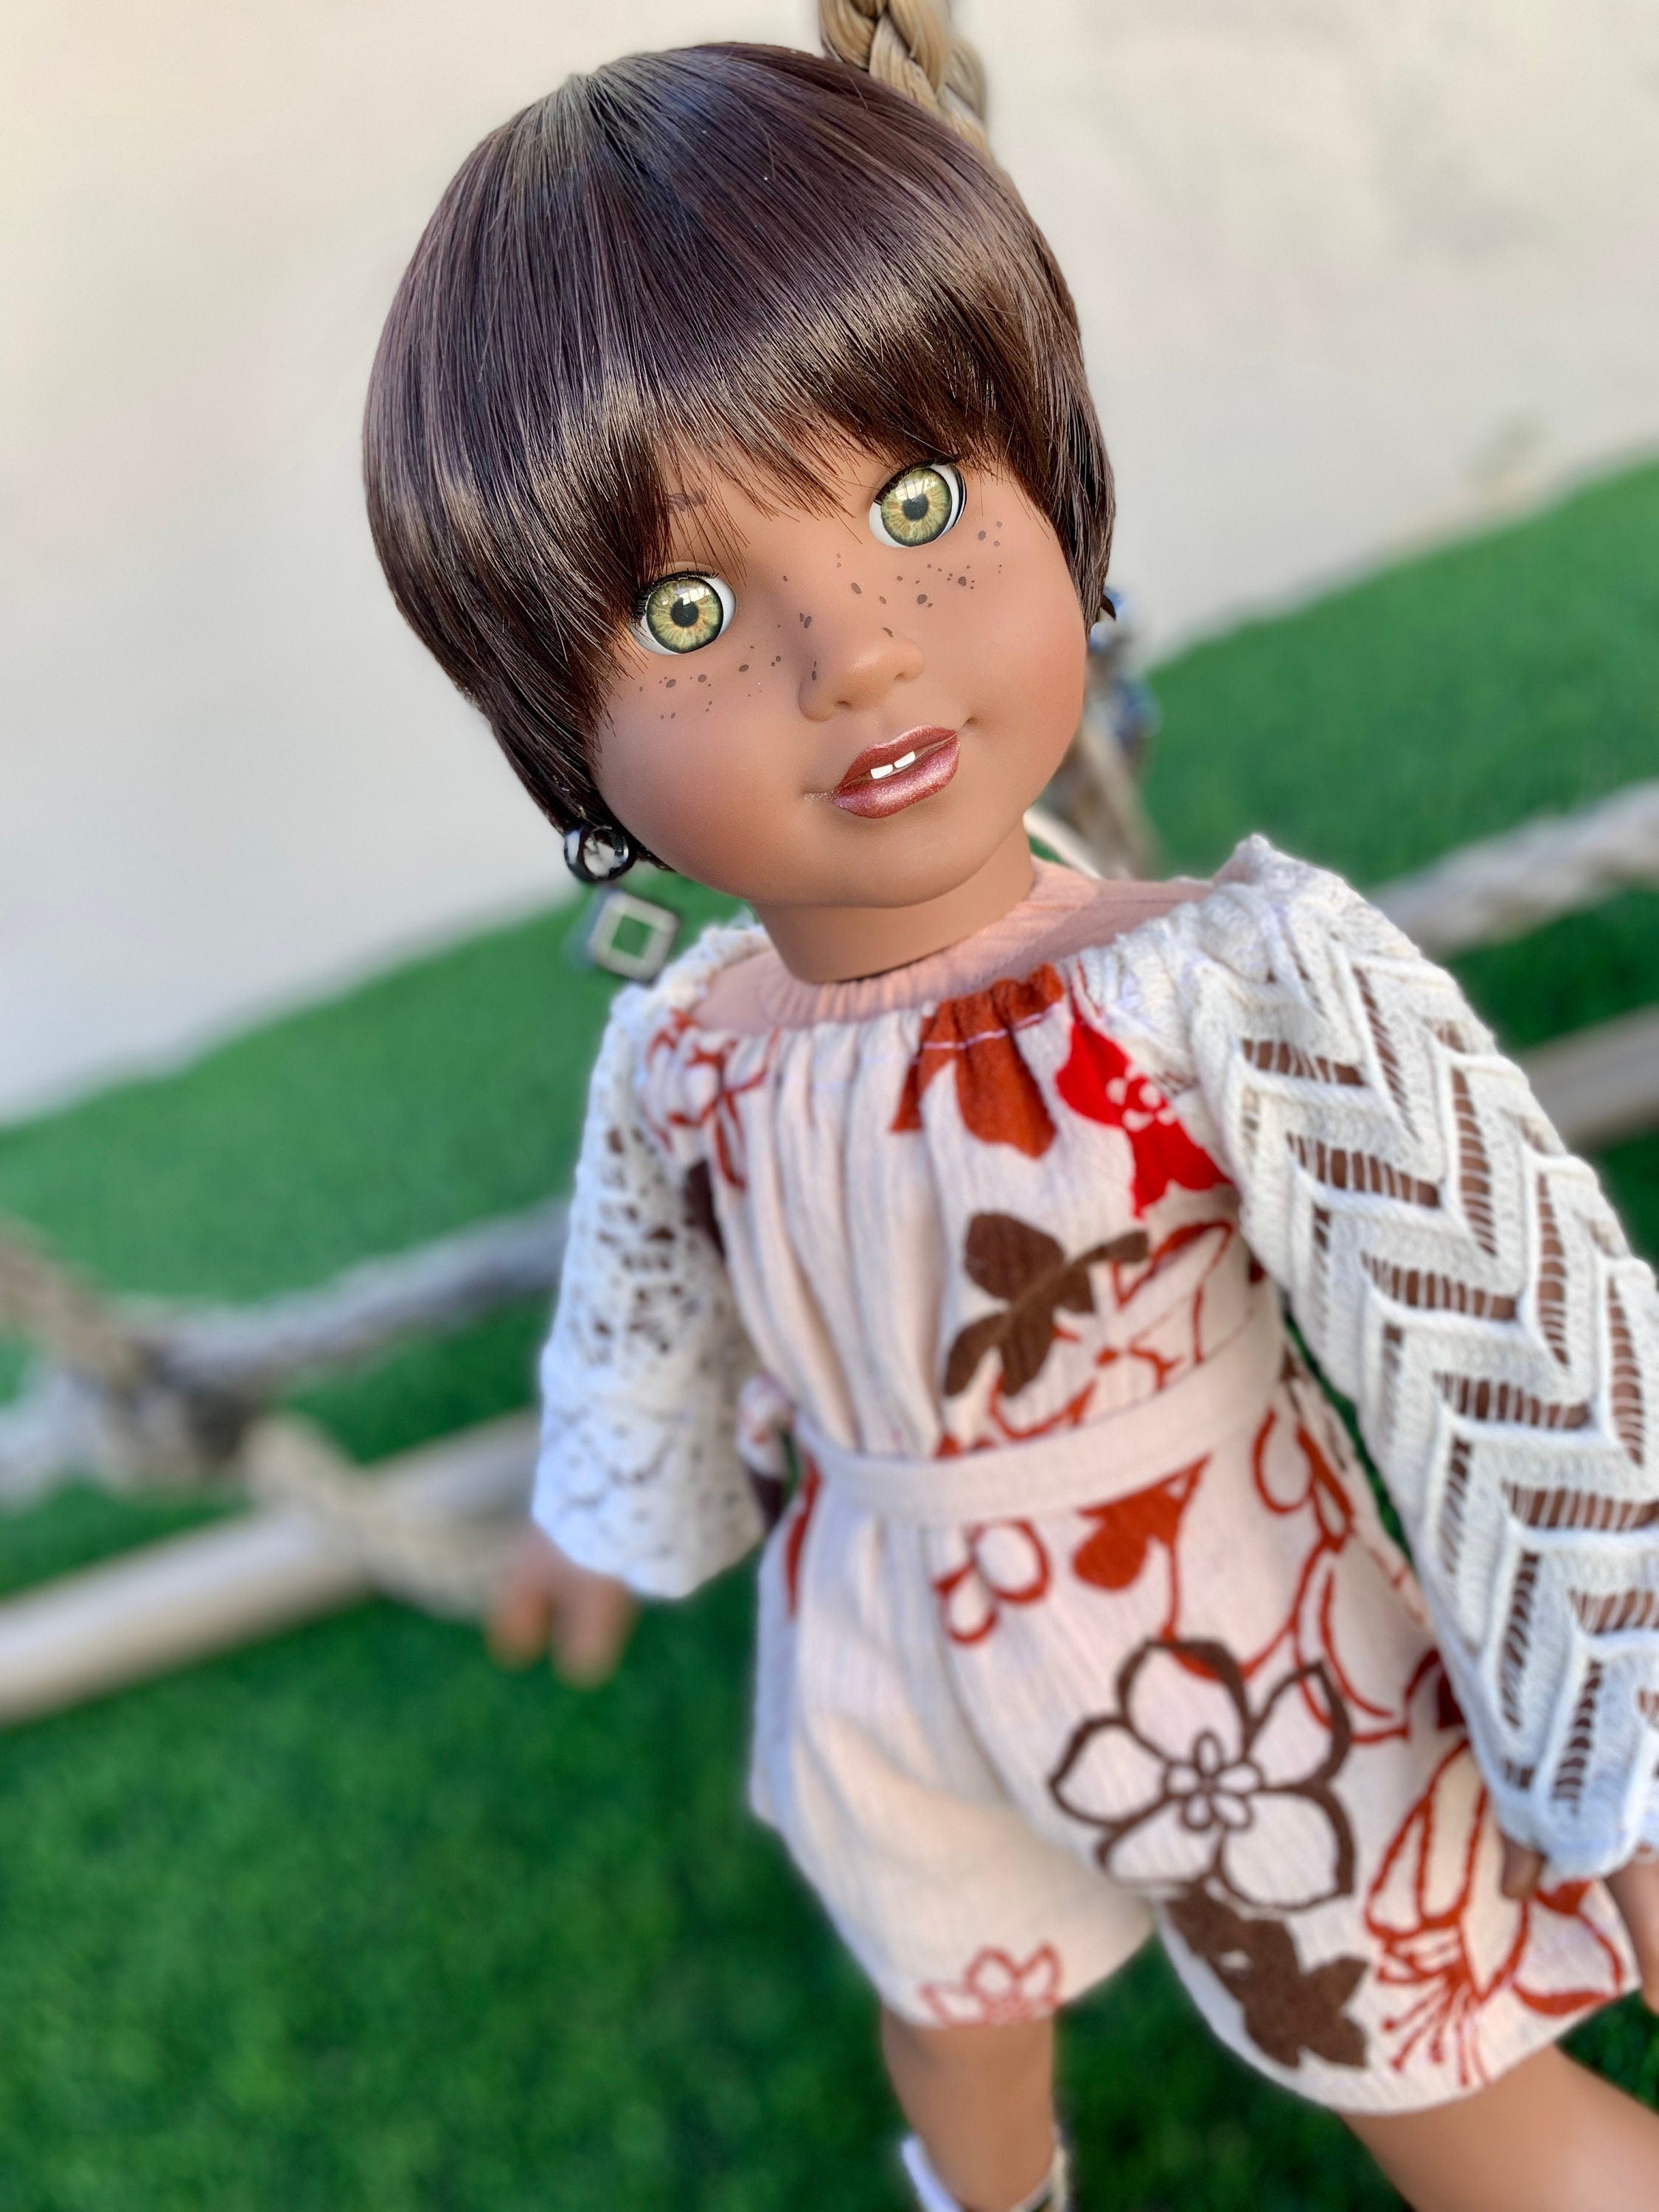 Custom doll wig for 18" American Girl Dolls - Heat Safe - Tangle Resistant - fits 10-11" head size of 18" dolls OG Blythe BJD Gotz Pixie